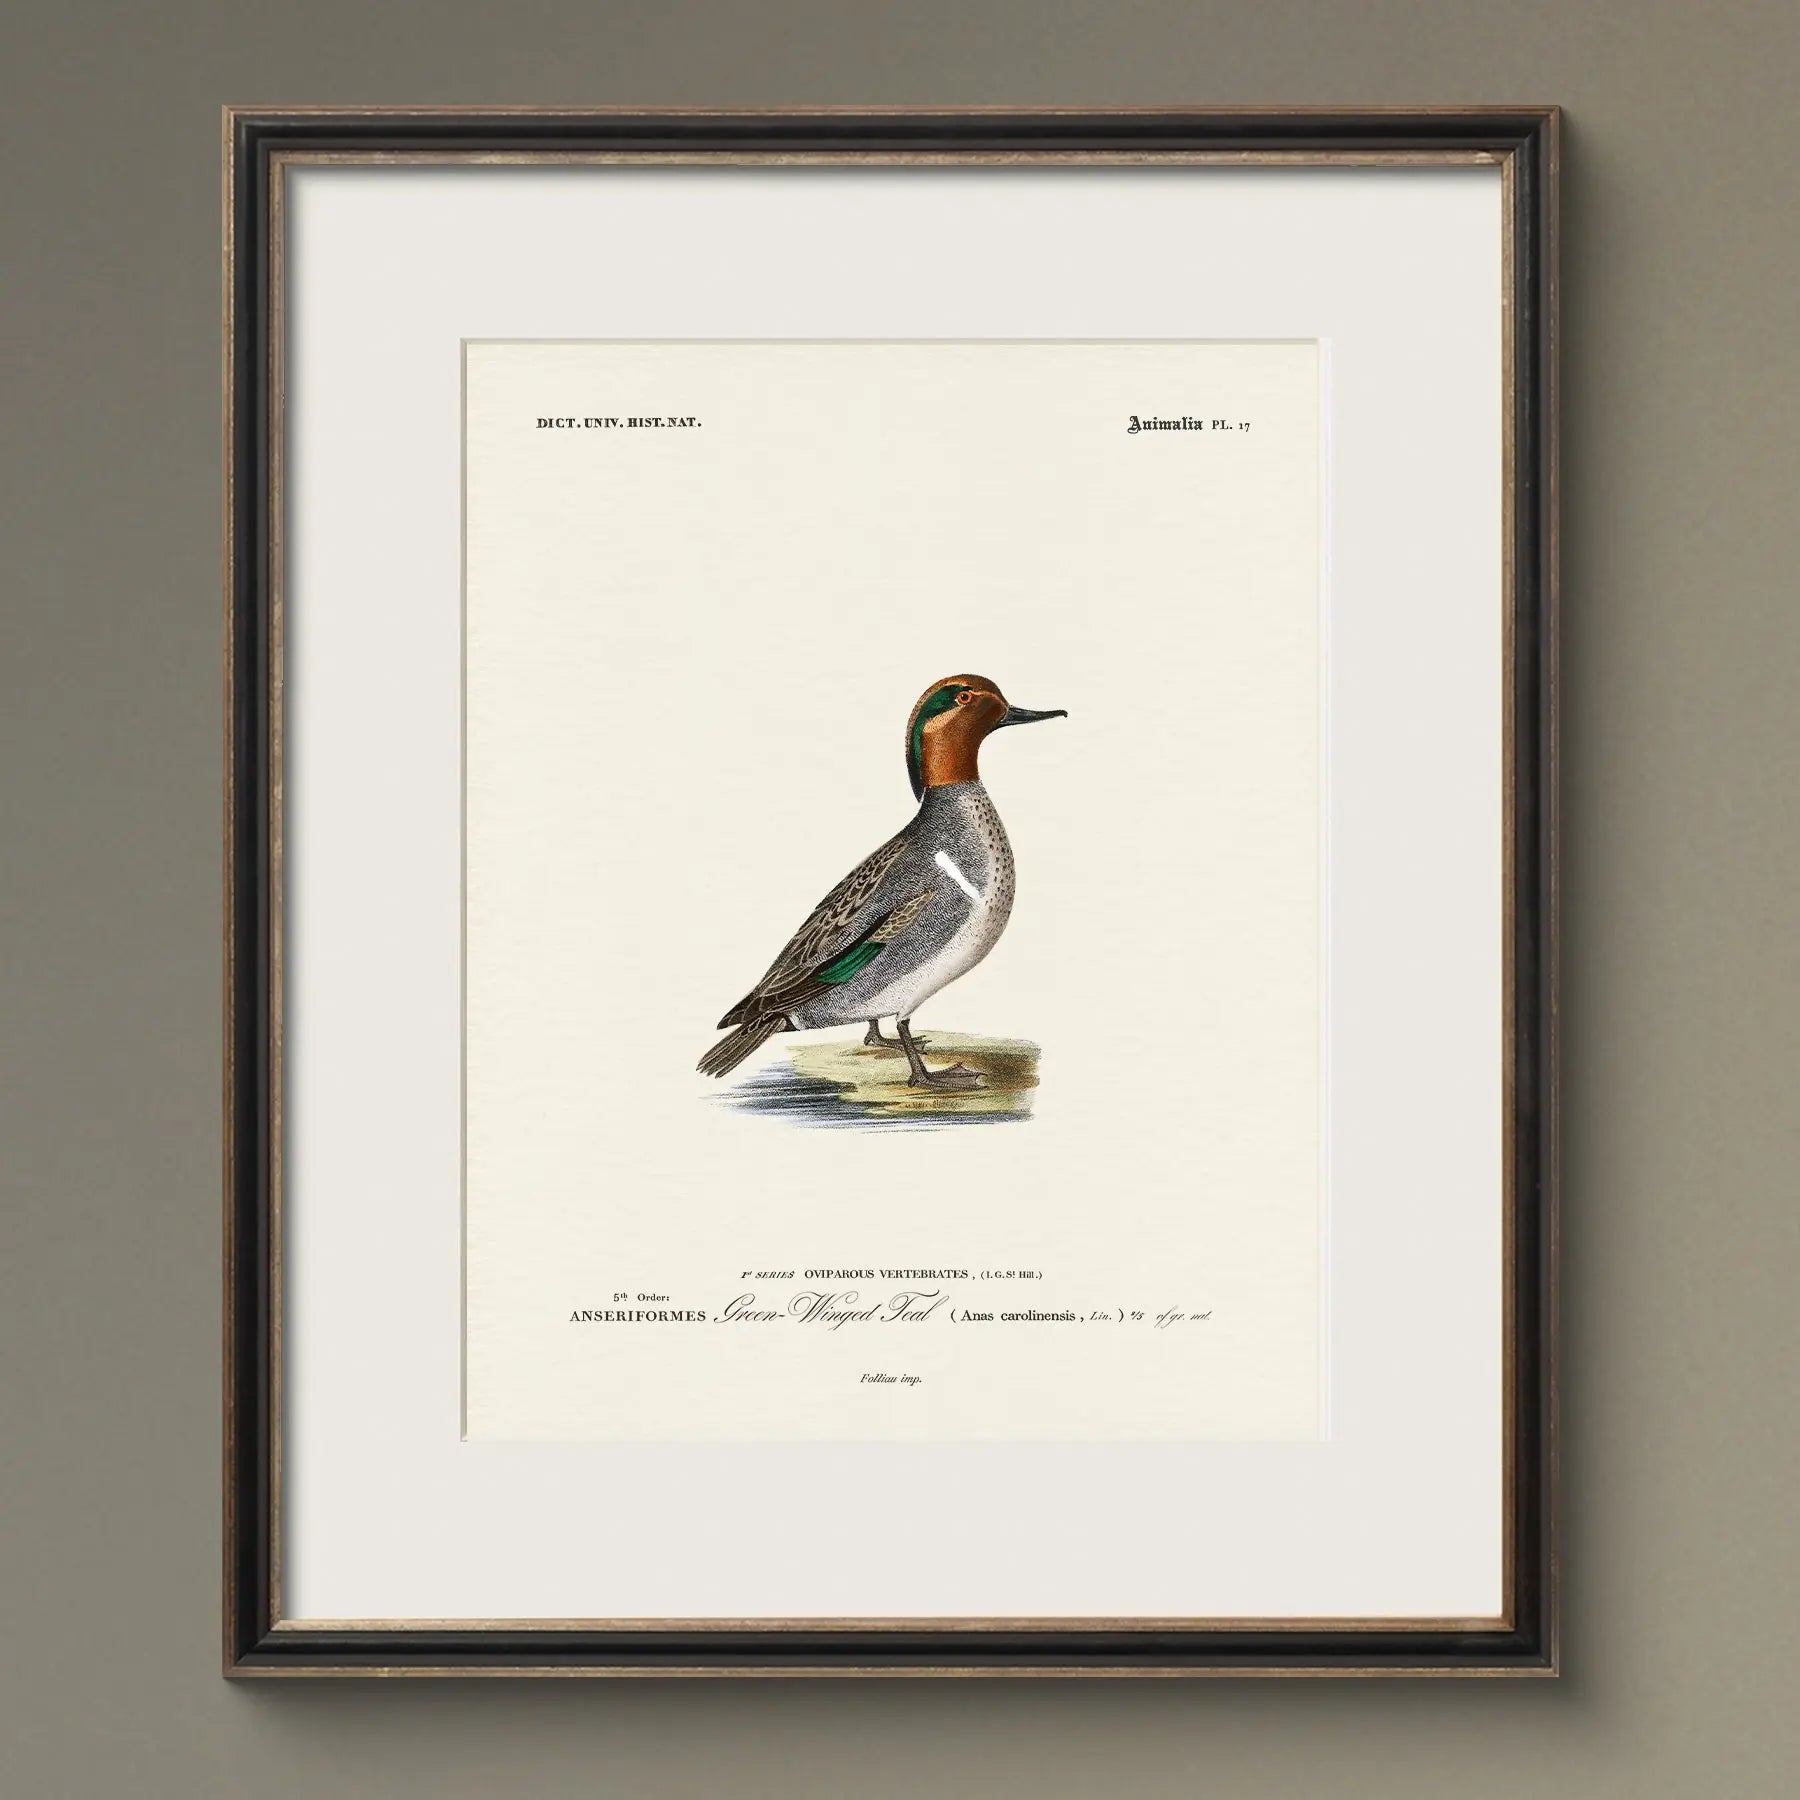 Vintage Naturalist Illustrations: North American Ducks - Emblem Atelier